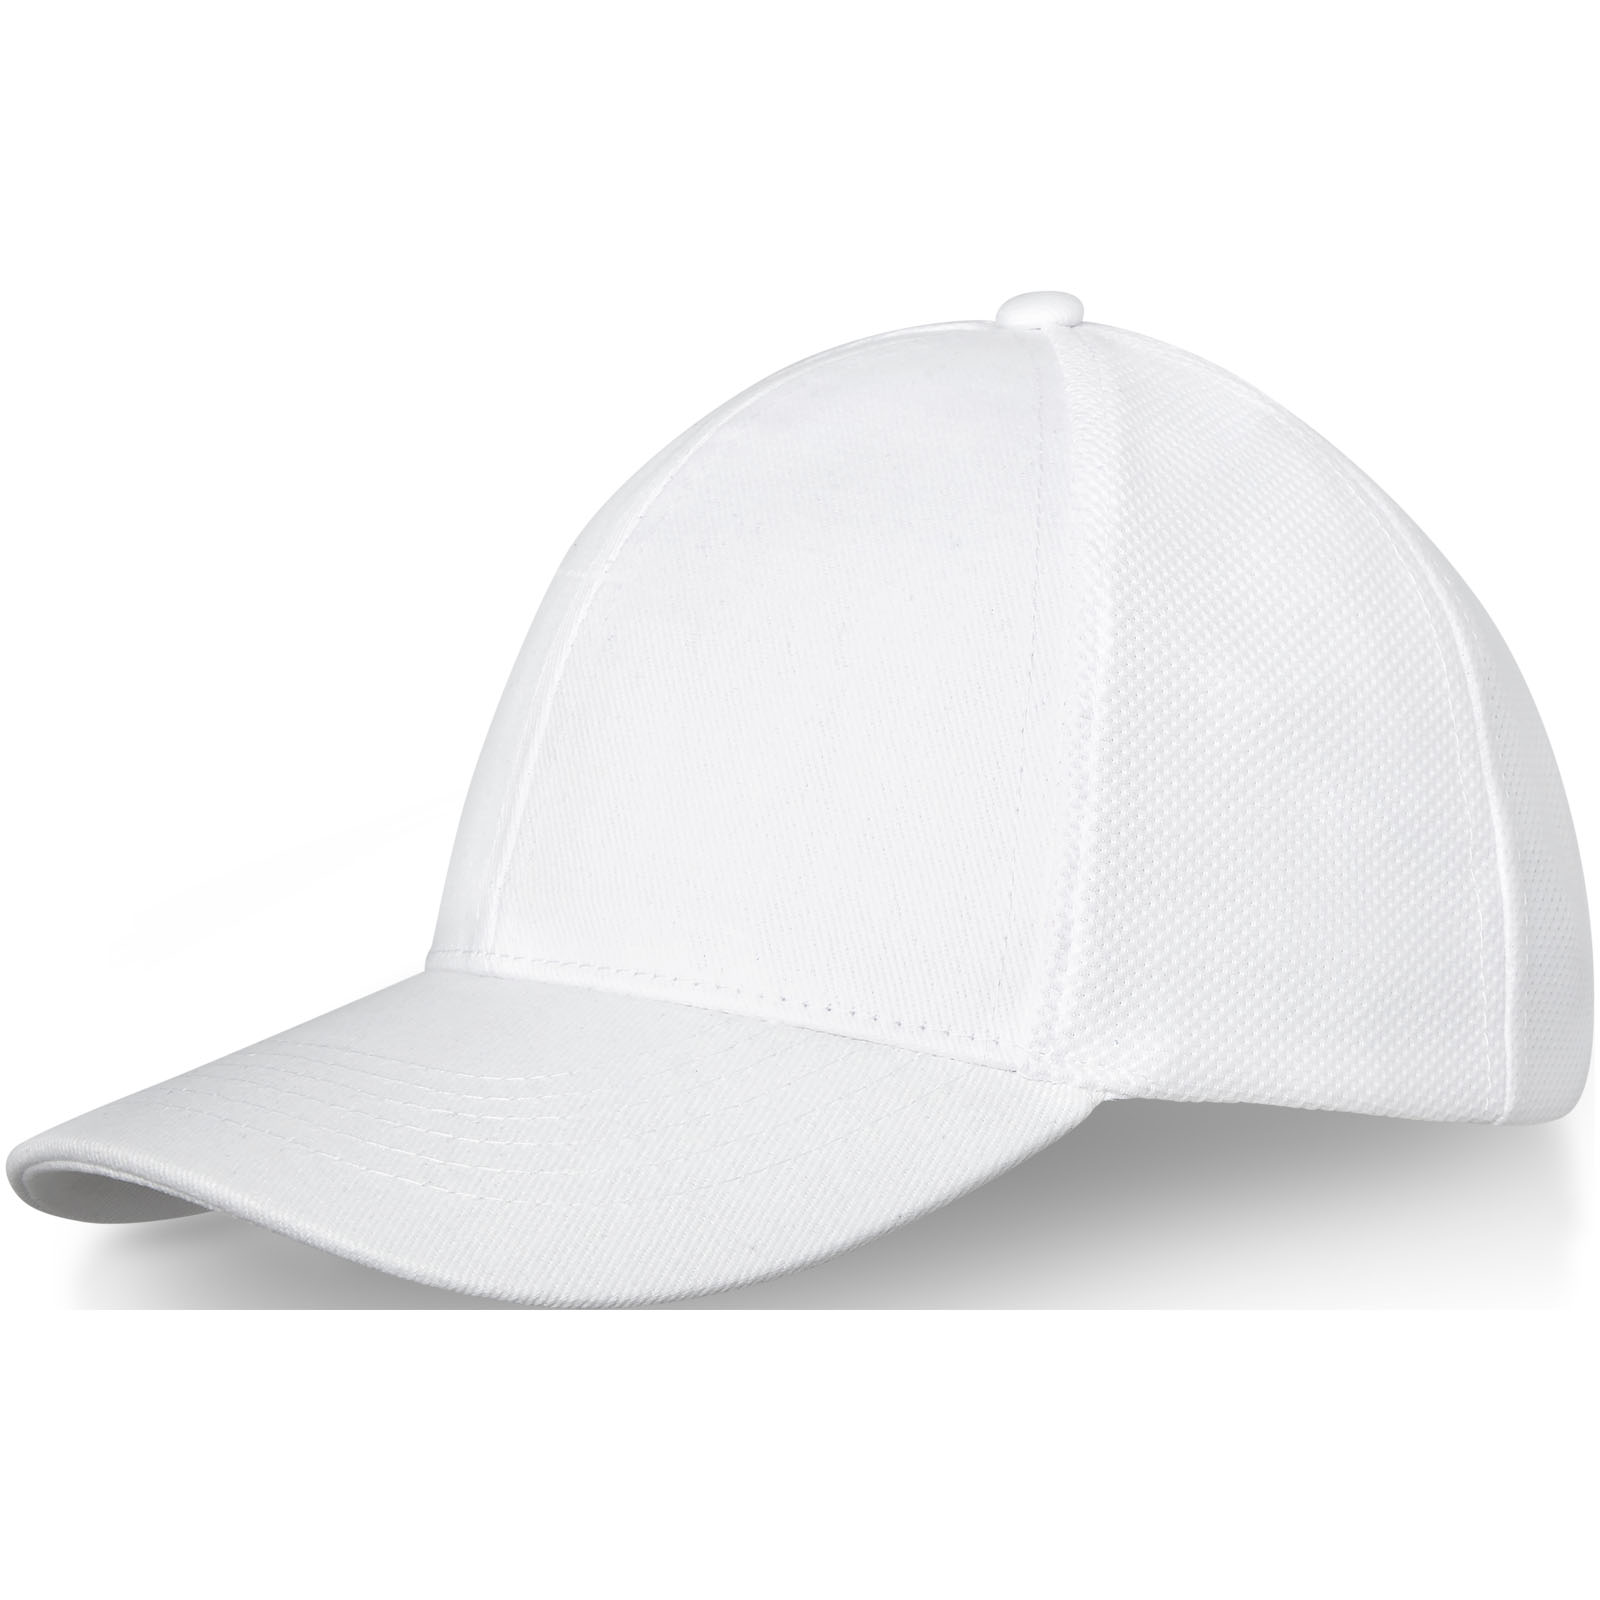 Caps & Hats - Drake 6 panel trucker cap